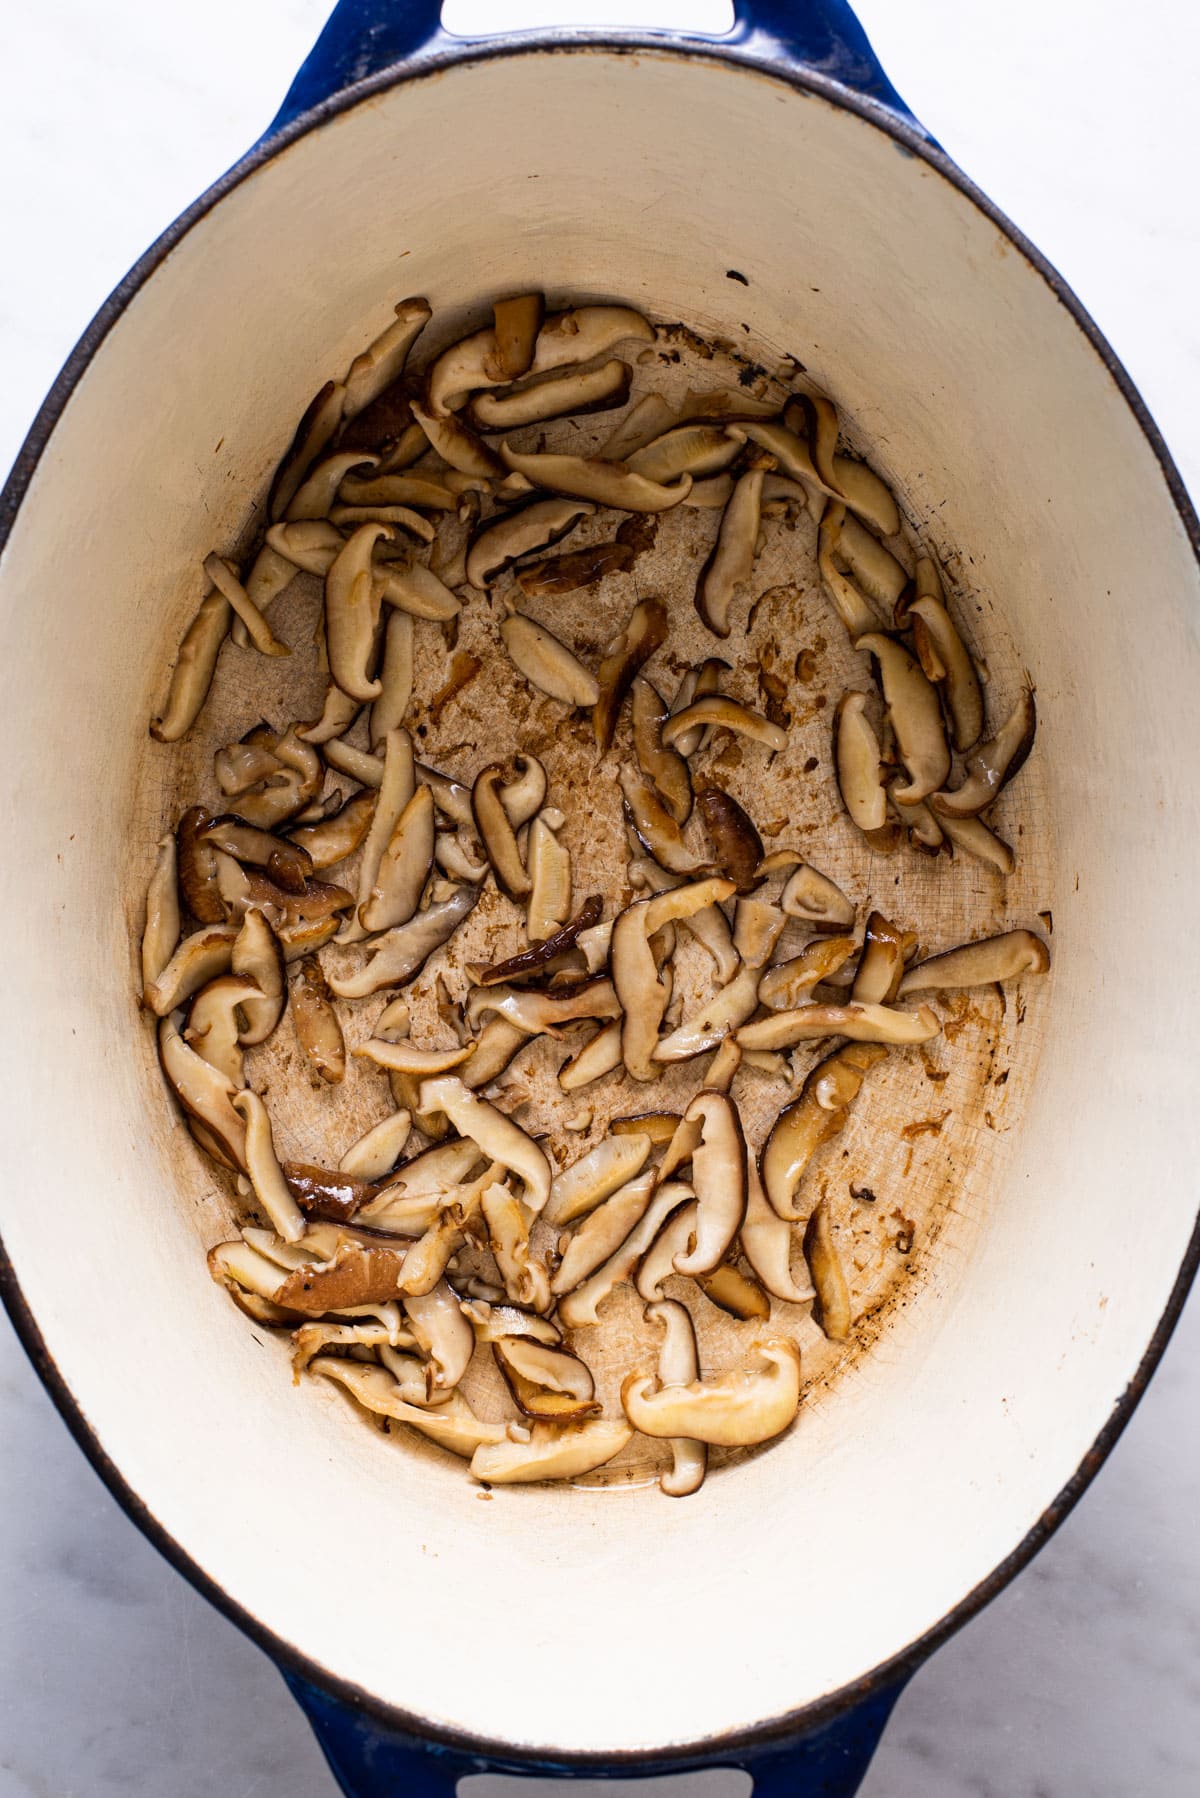 Sauteed mushrooms in a Dutch oven.